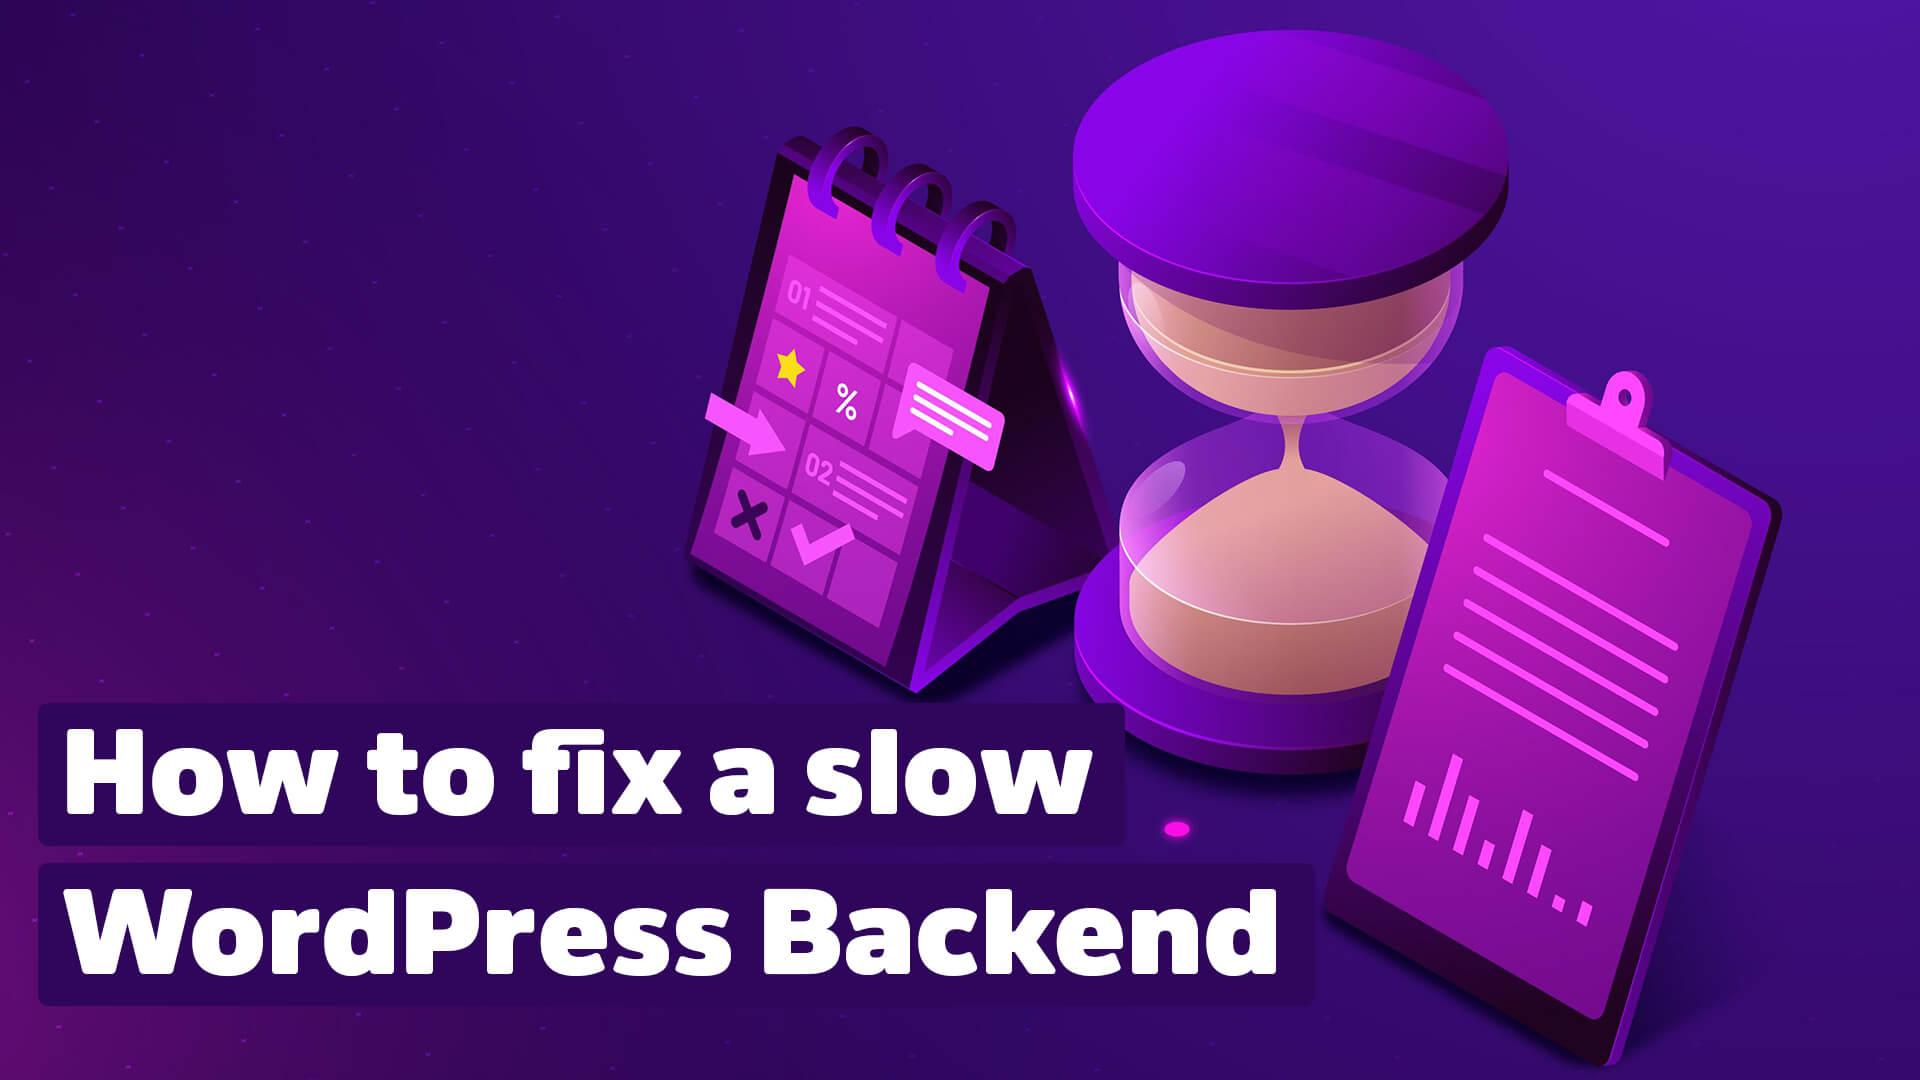 WordPress Backend slow